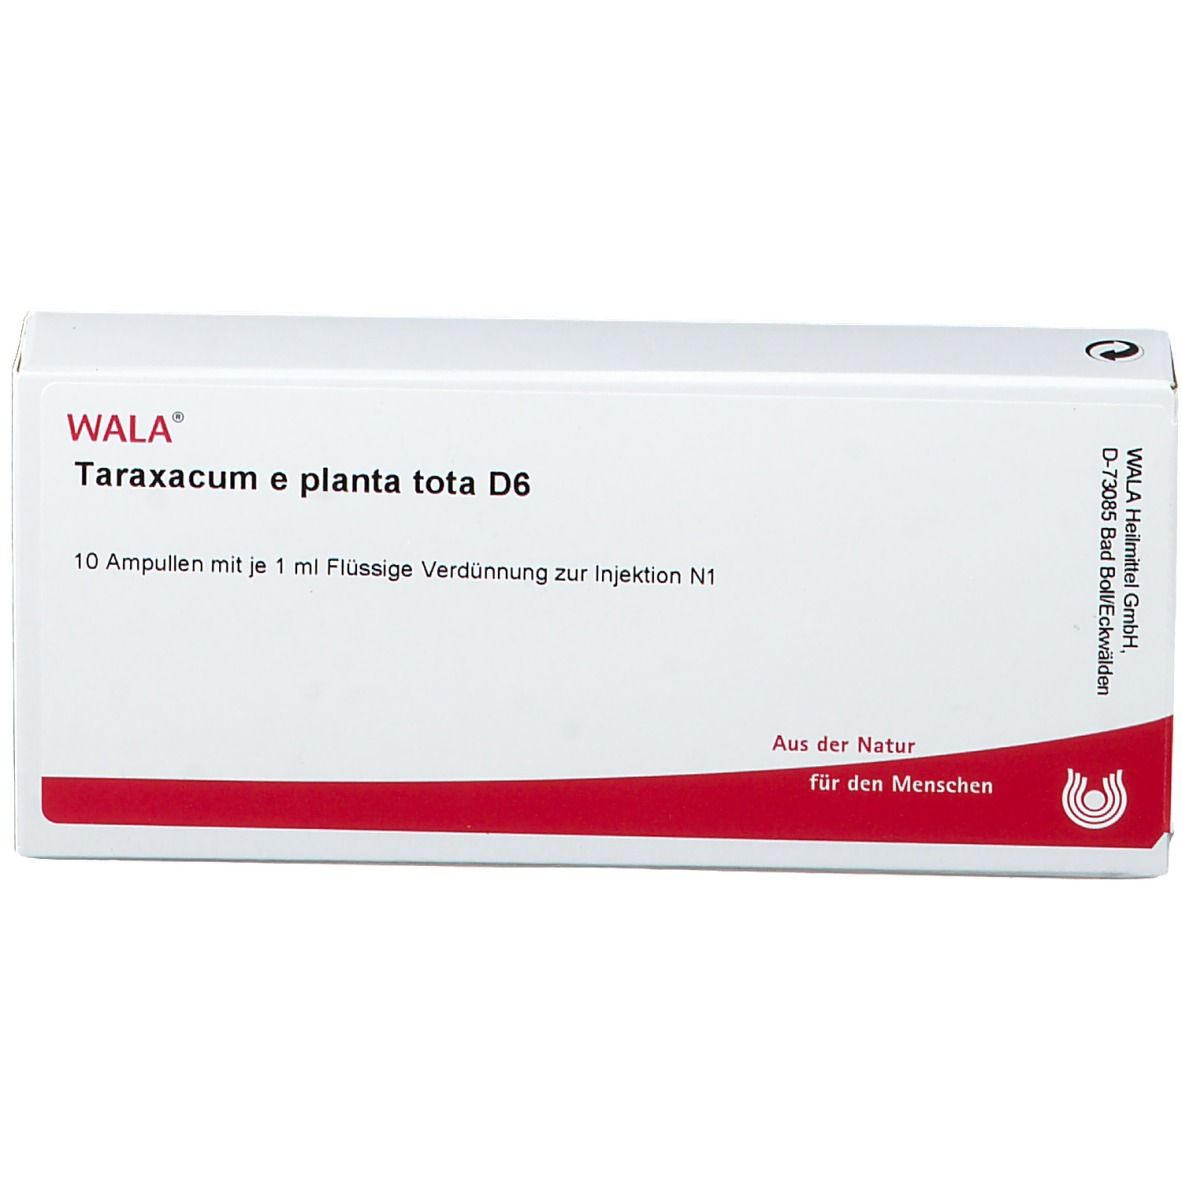 WALA® Taraxacum e planta tota D 6